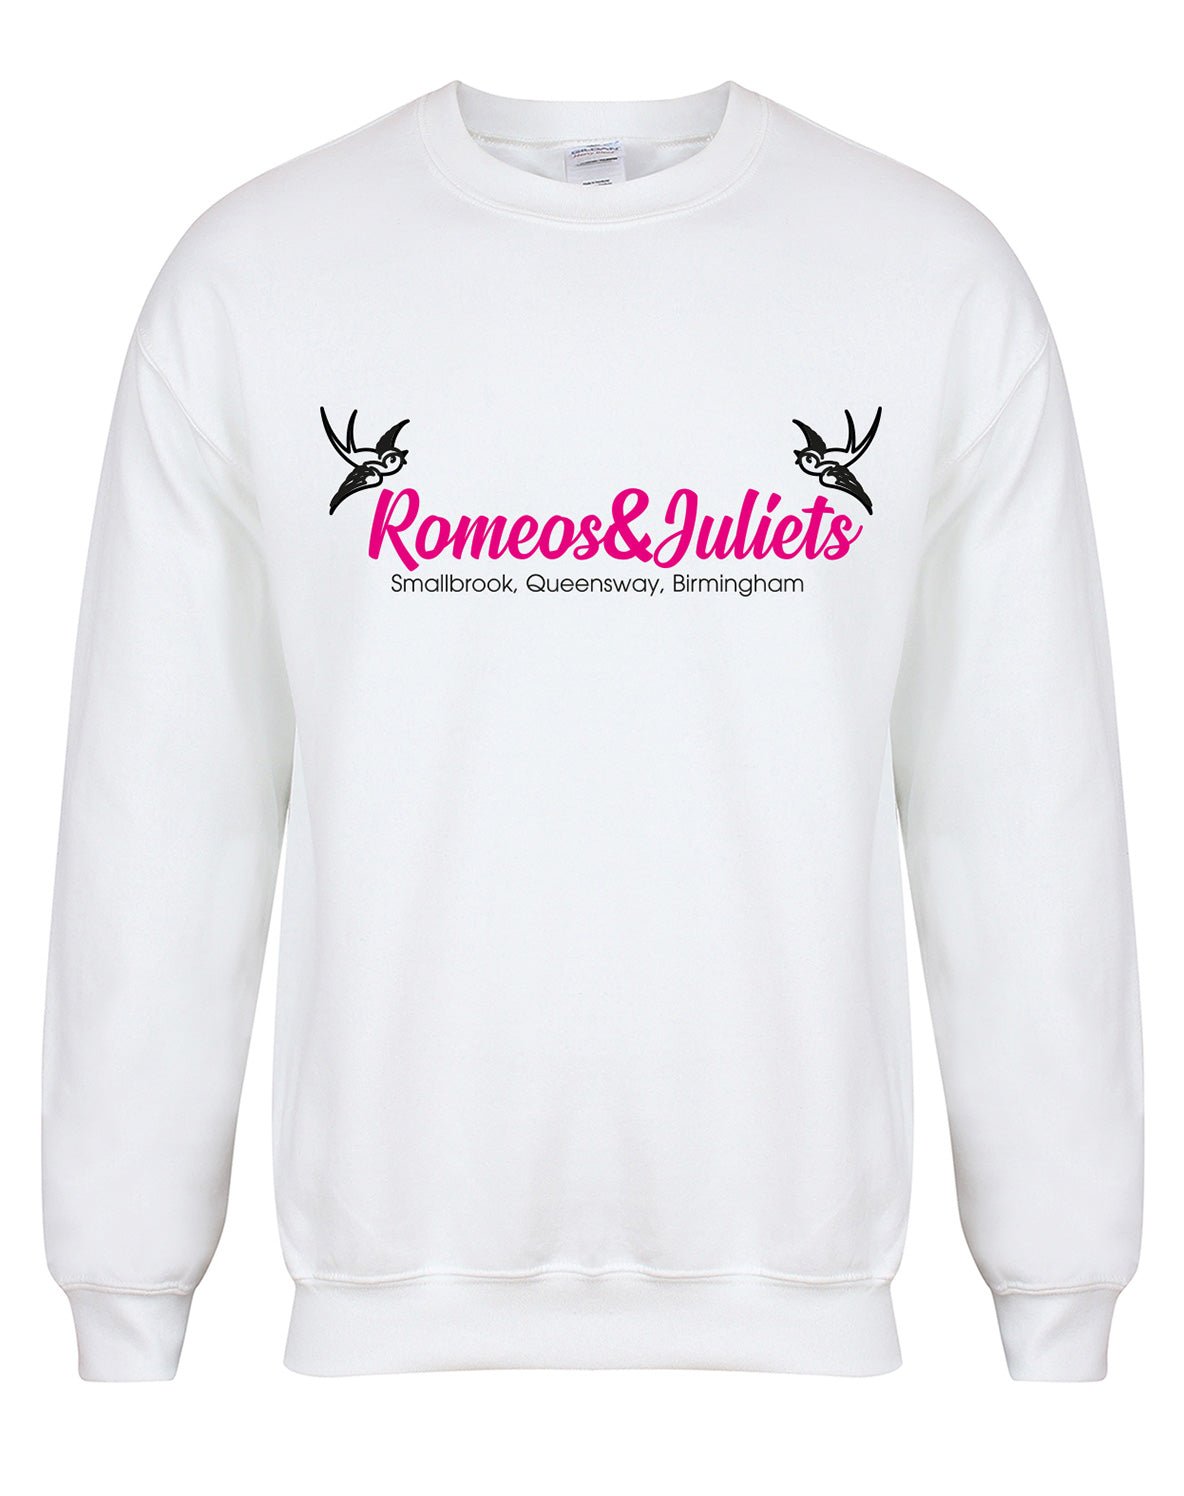 Romeo & Juliets - Birmingham - unisex fit sweatshirt - various colours - Dirty Stop Outs